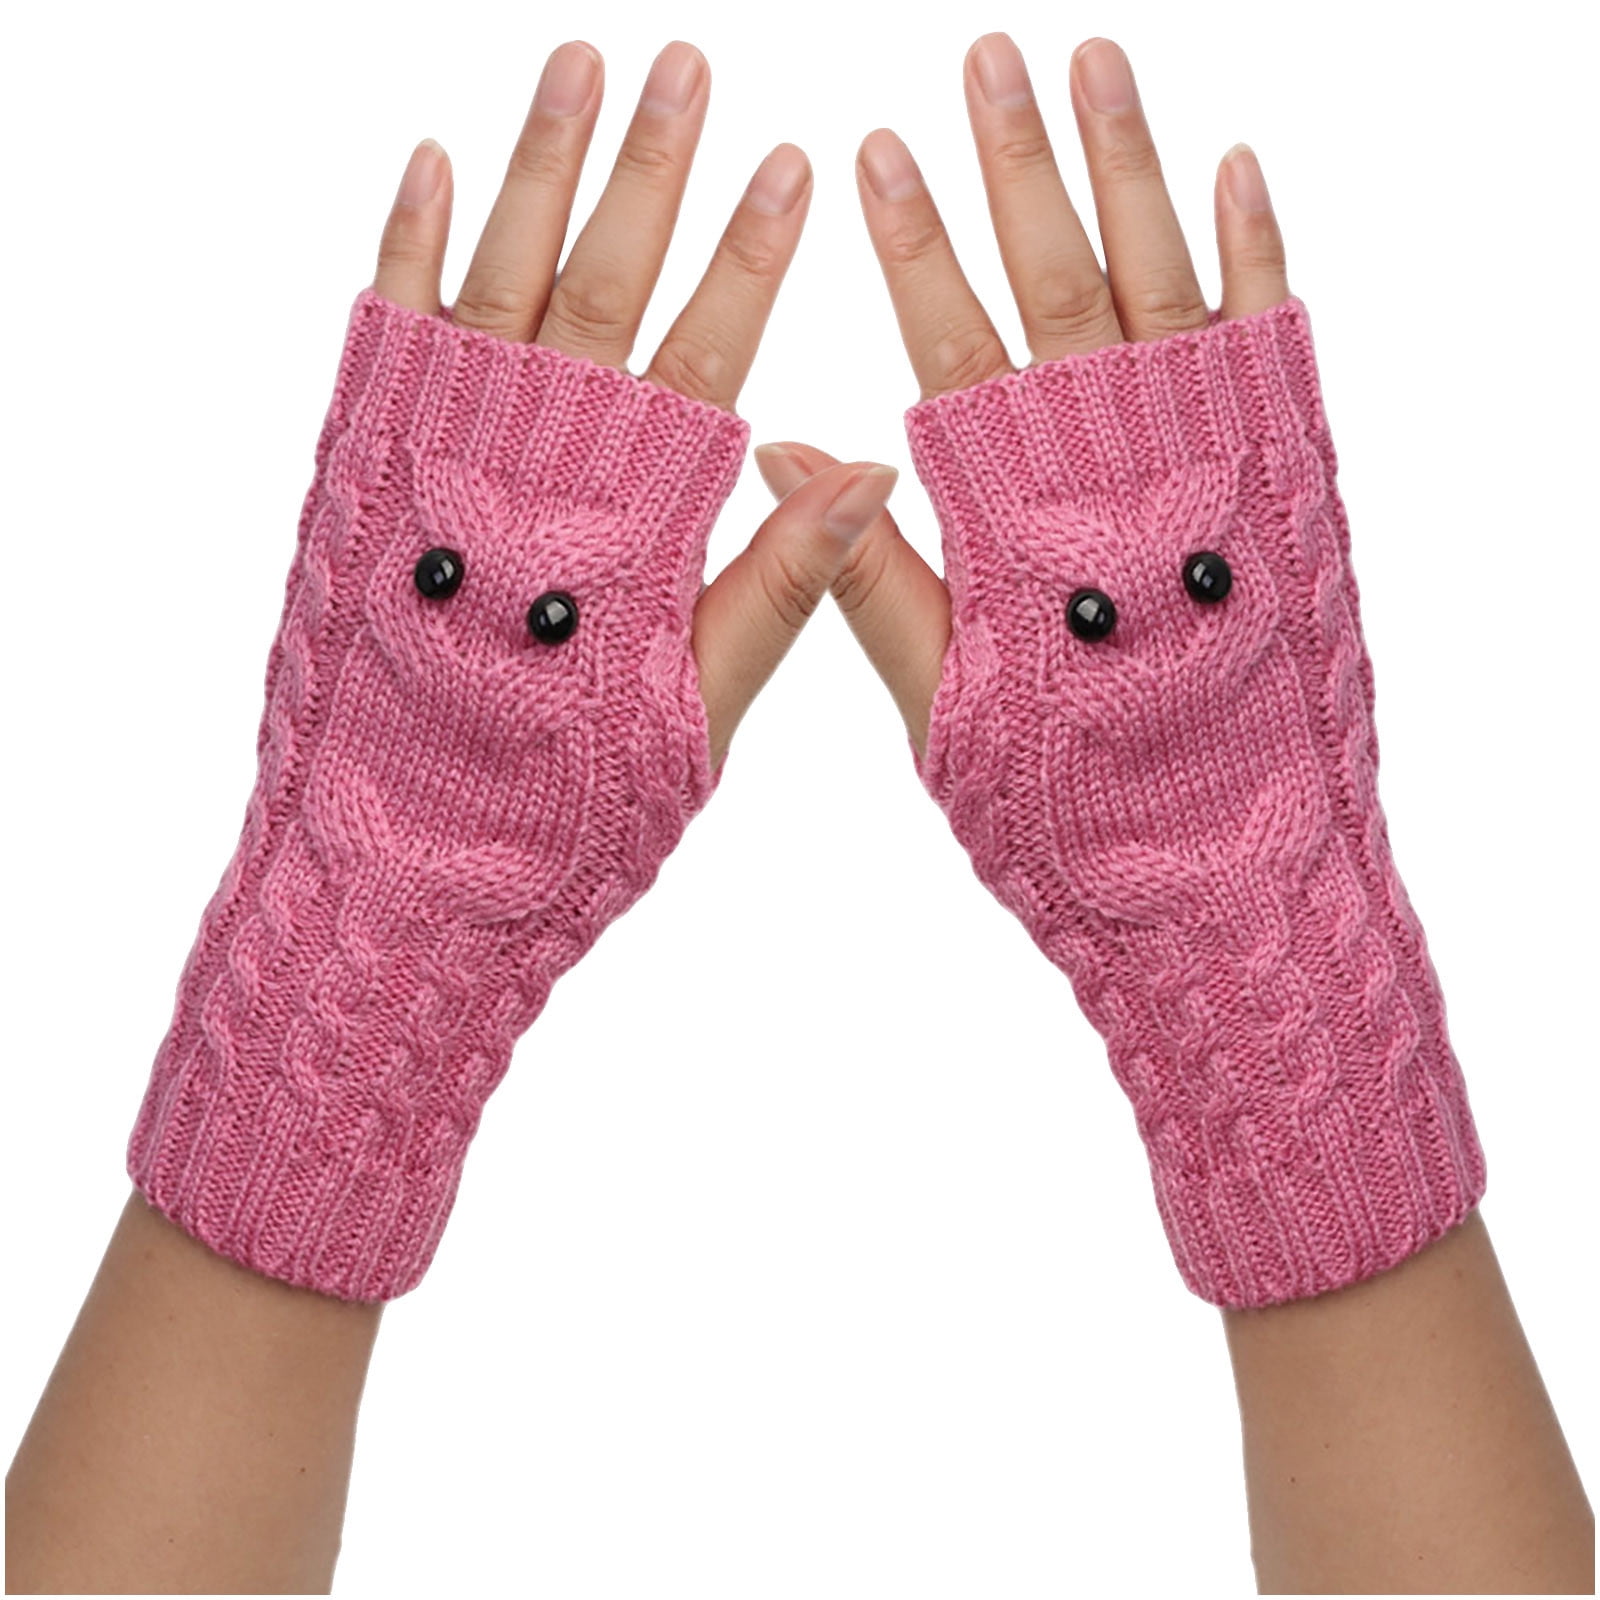 DEELIN Sale Clearance Fashion Winter Warm Wrist Arm Hand Warmer Knitted Long Fingerless Gloves Mitten Working Outdoor Ladies Thick Gloves